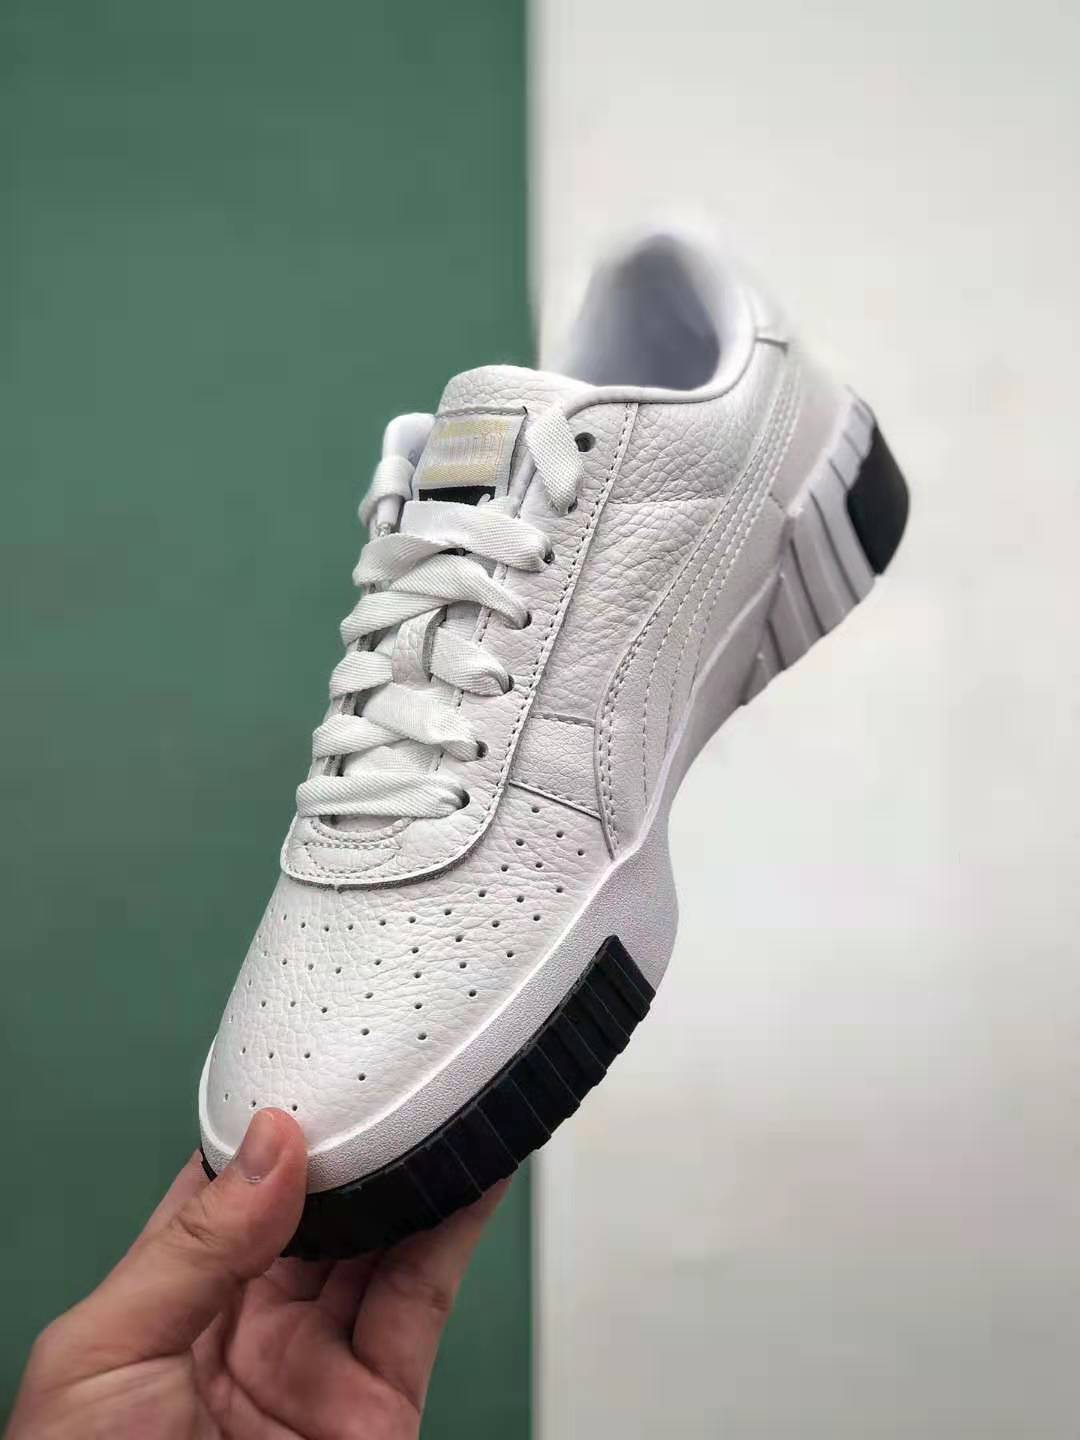 PUMA Cali 'White' 369155-04 - Stylish and Classic Women's Sneakers